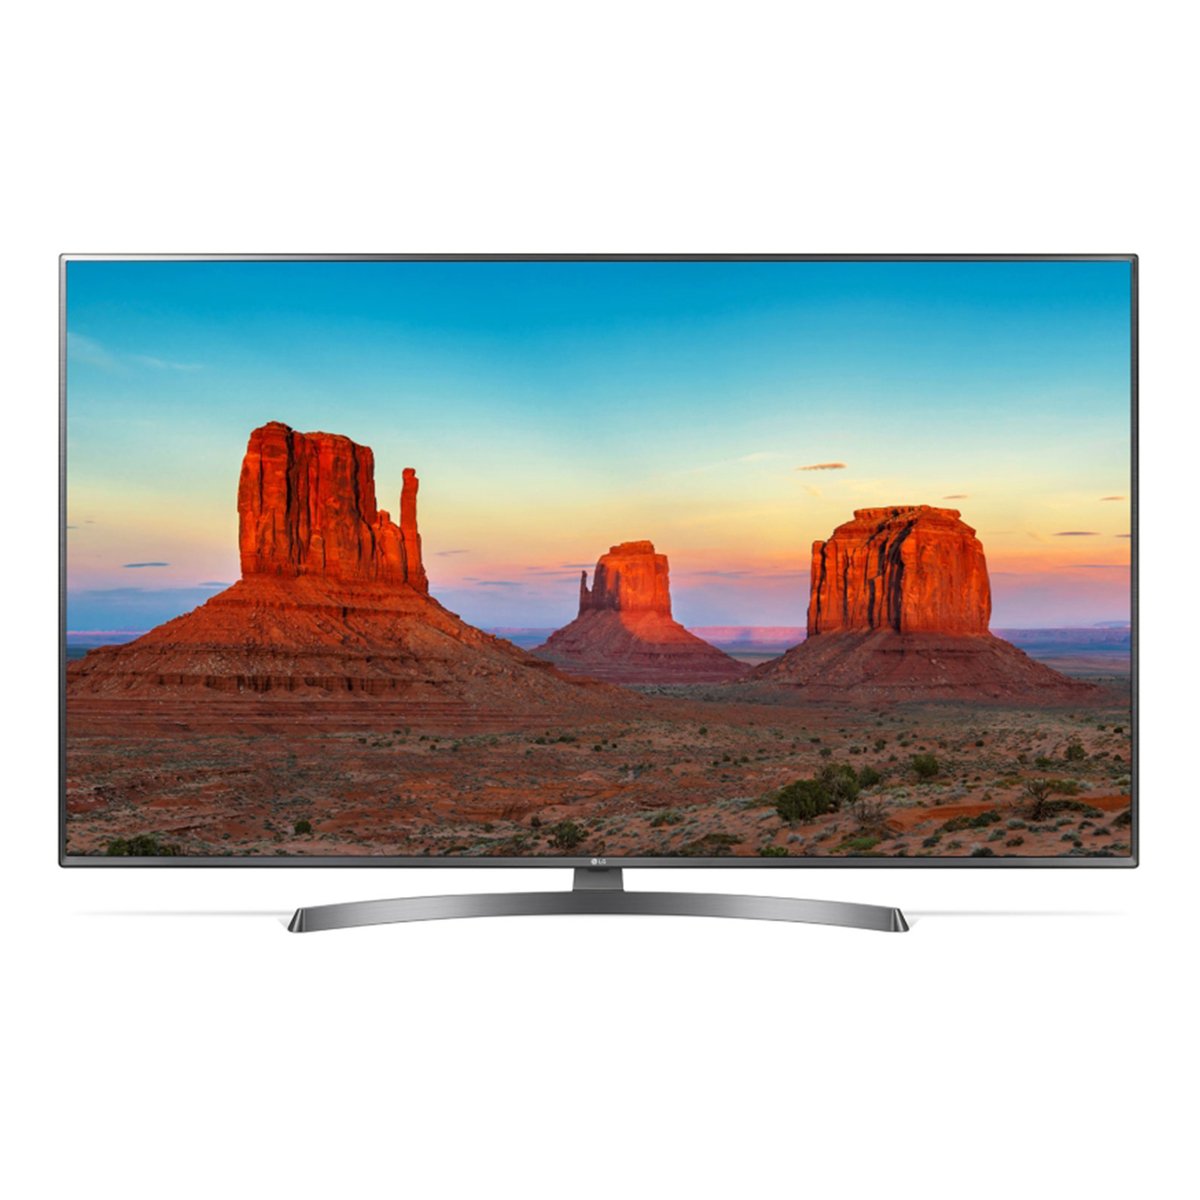 LG 4K Ultra HD Smart LED TV 55UK6700PVD 55inch